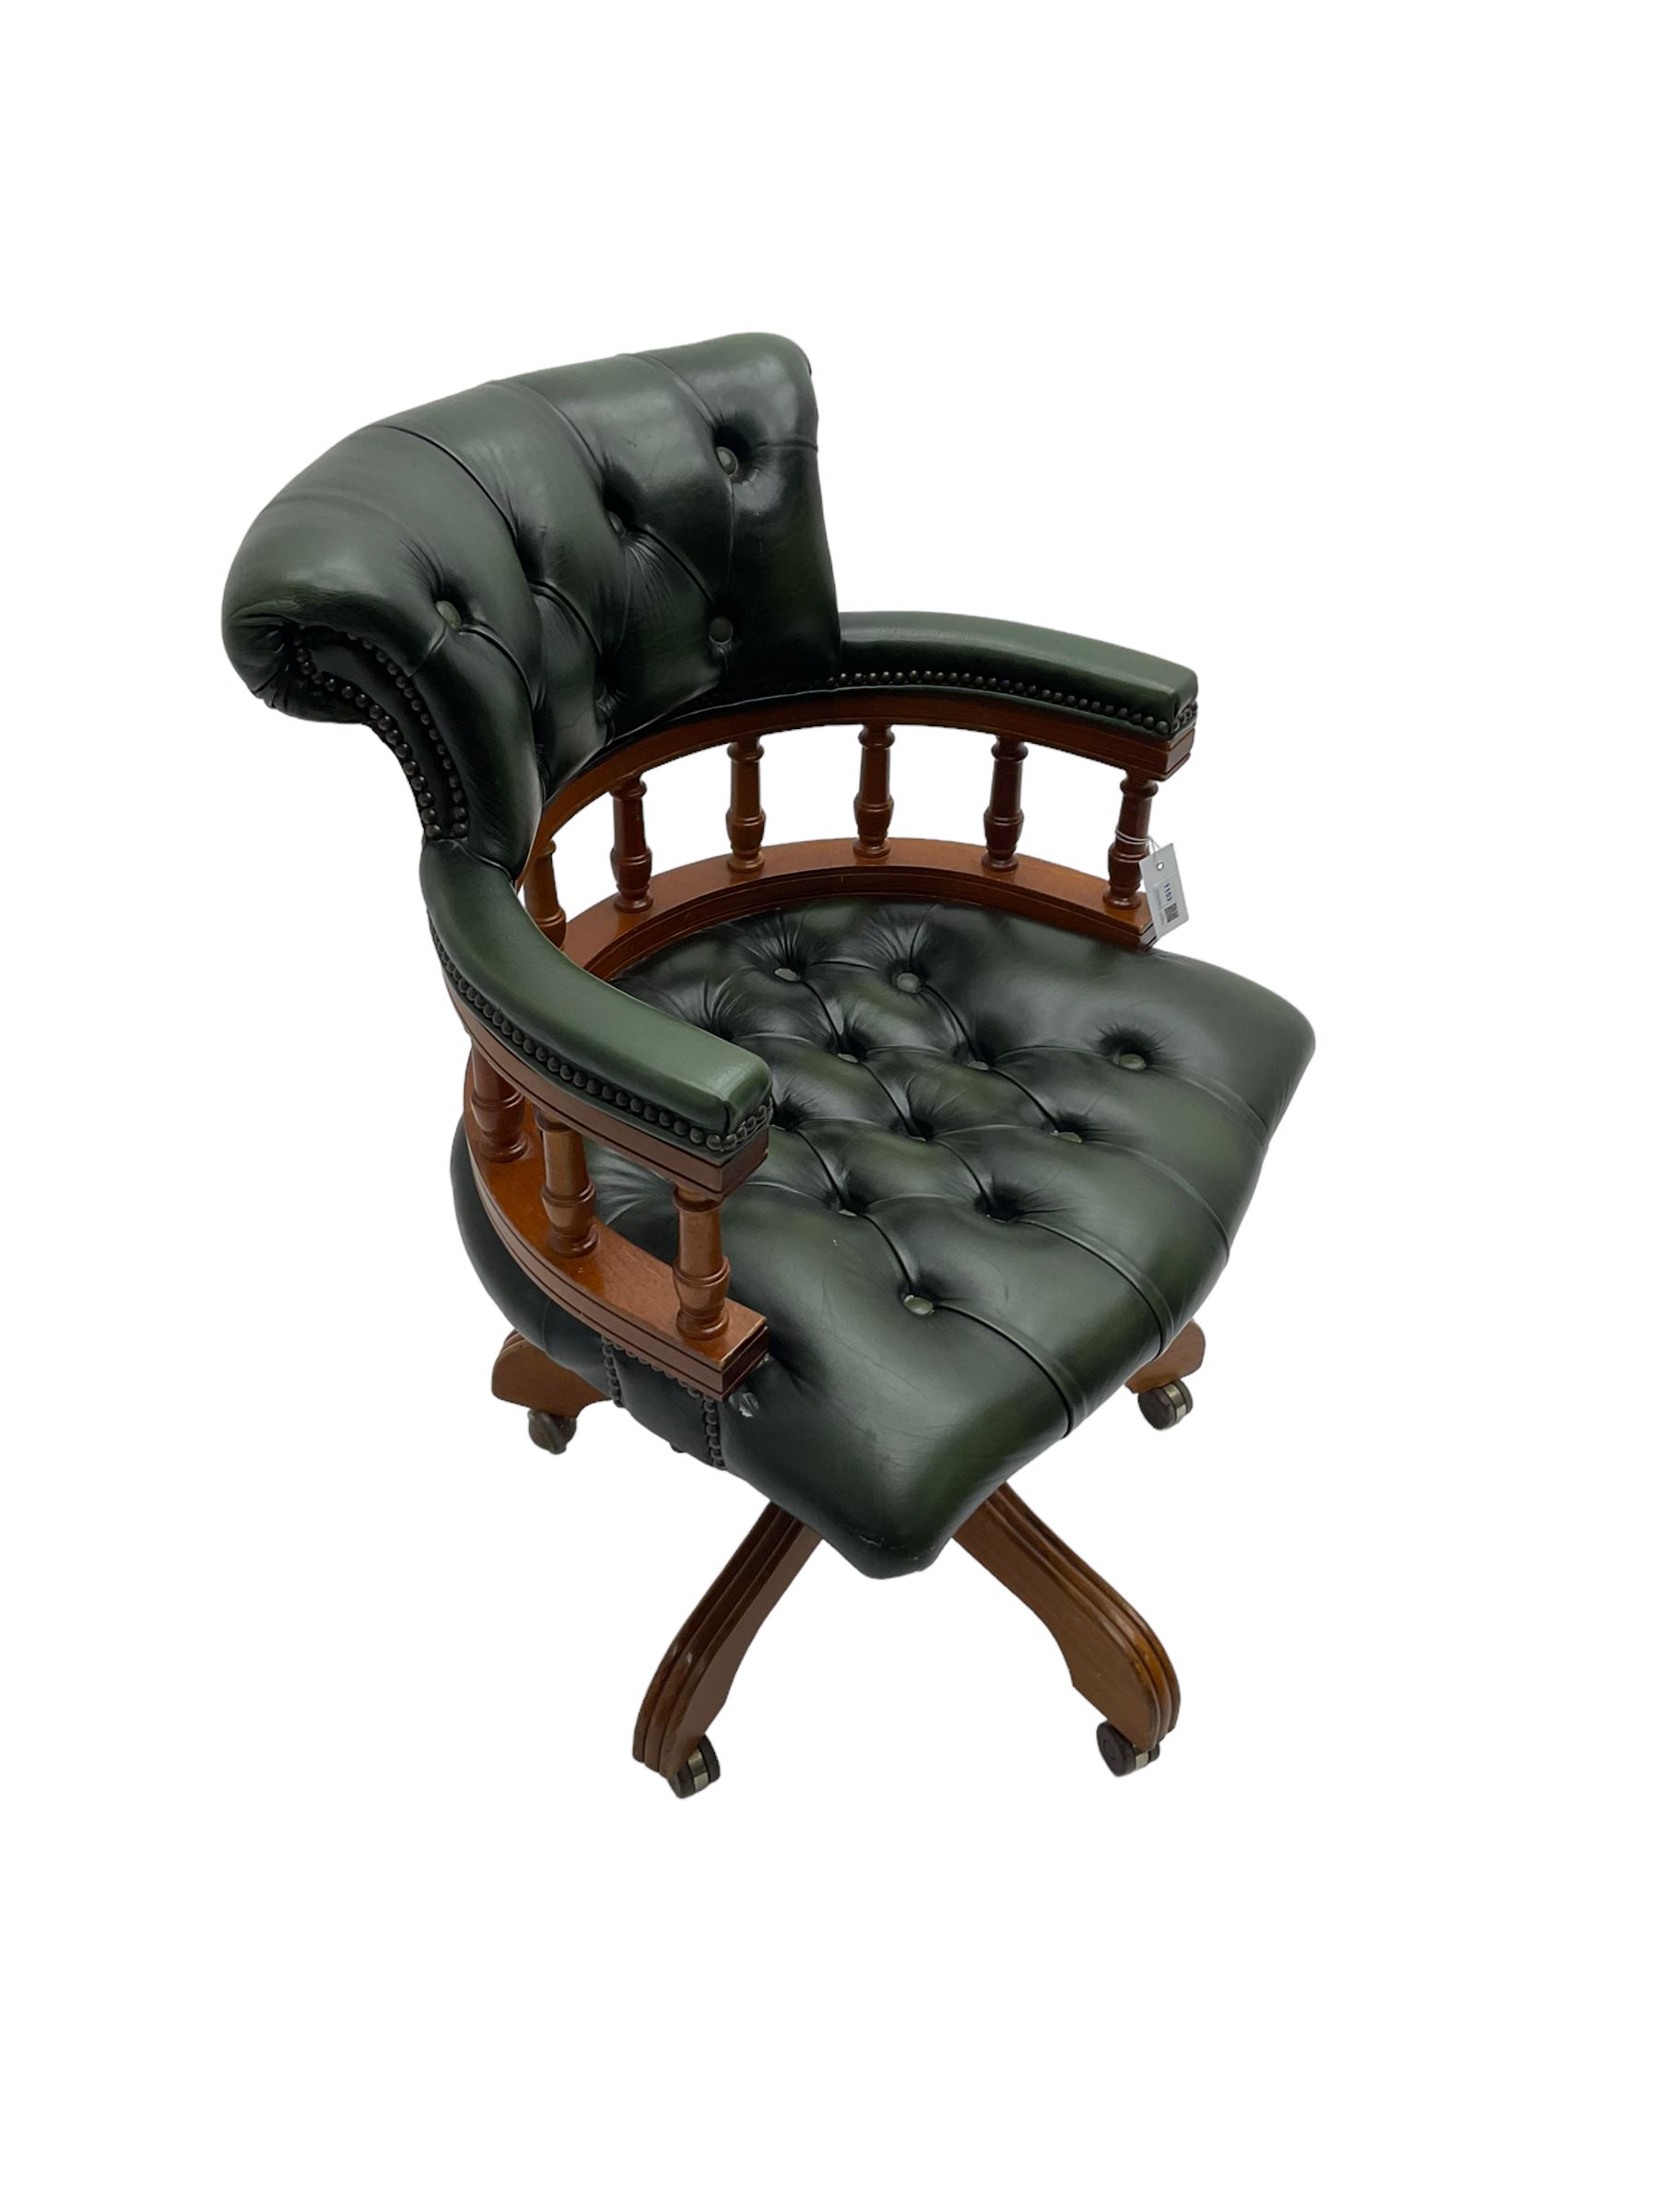 Victorian design captains swivel desk chair - Image 4 of 6